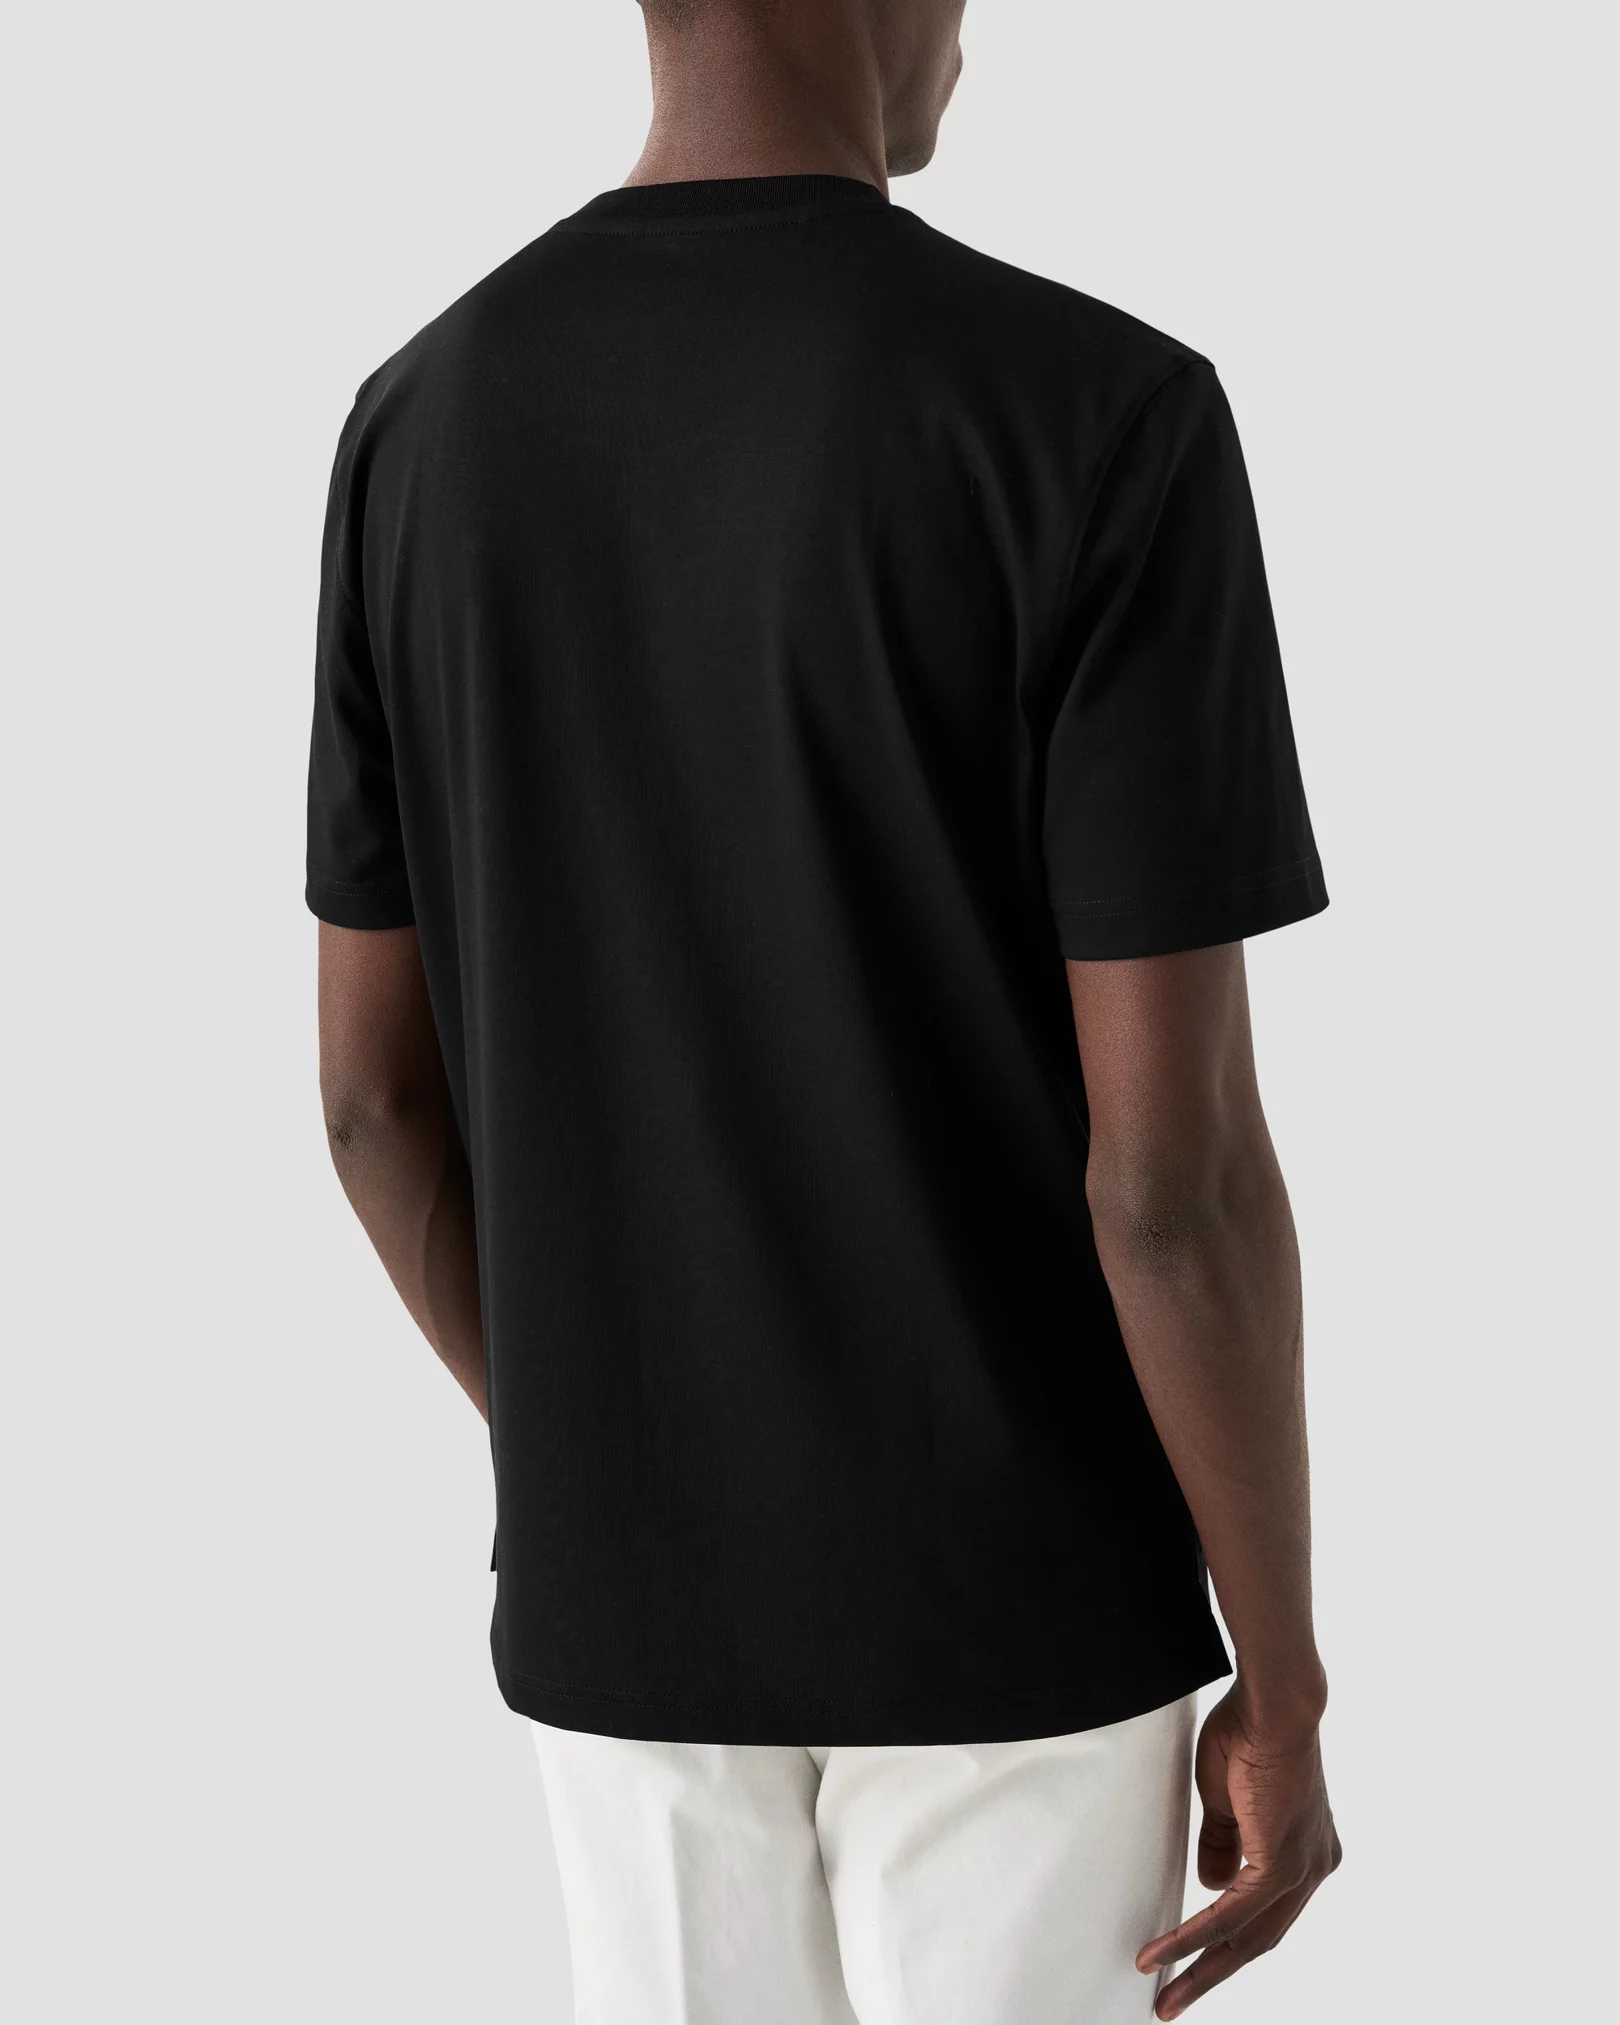 Eton - black cotton t shirt